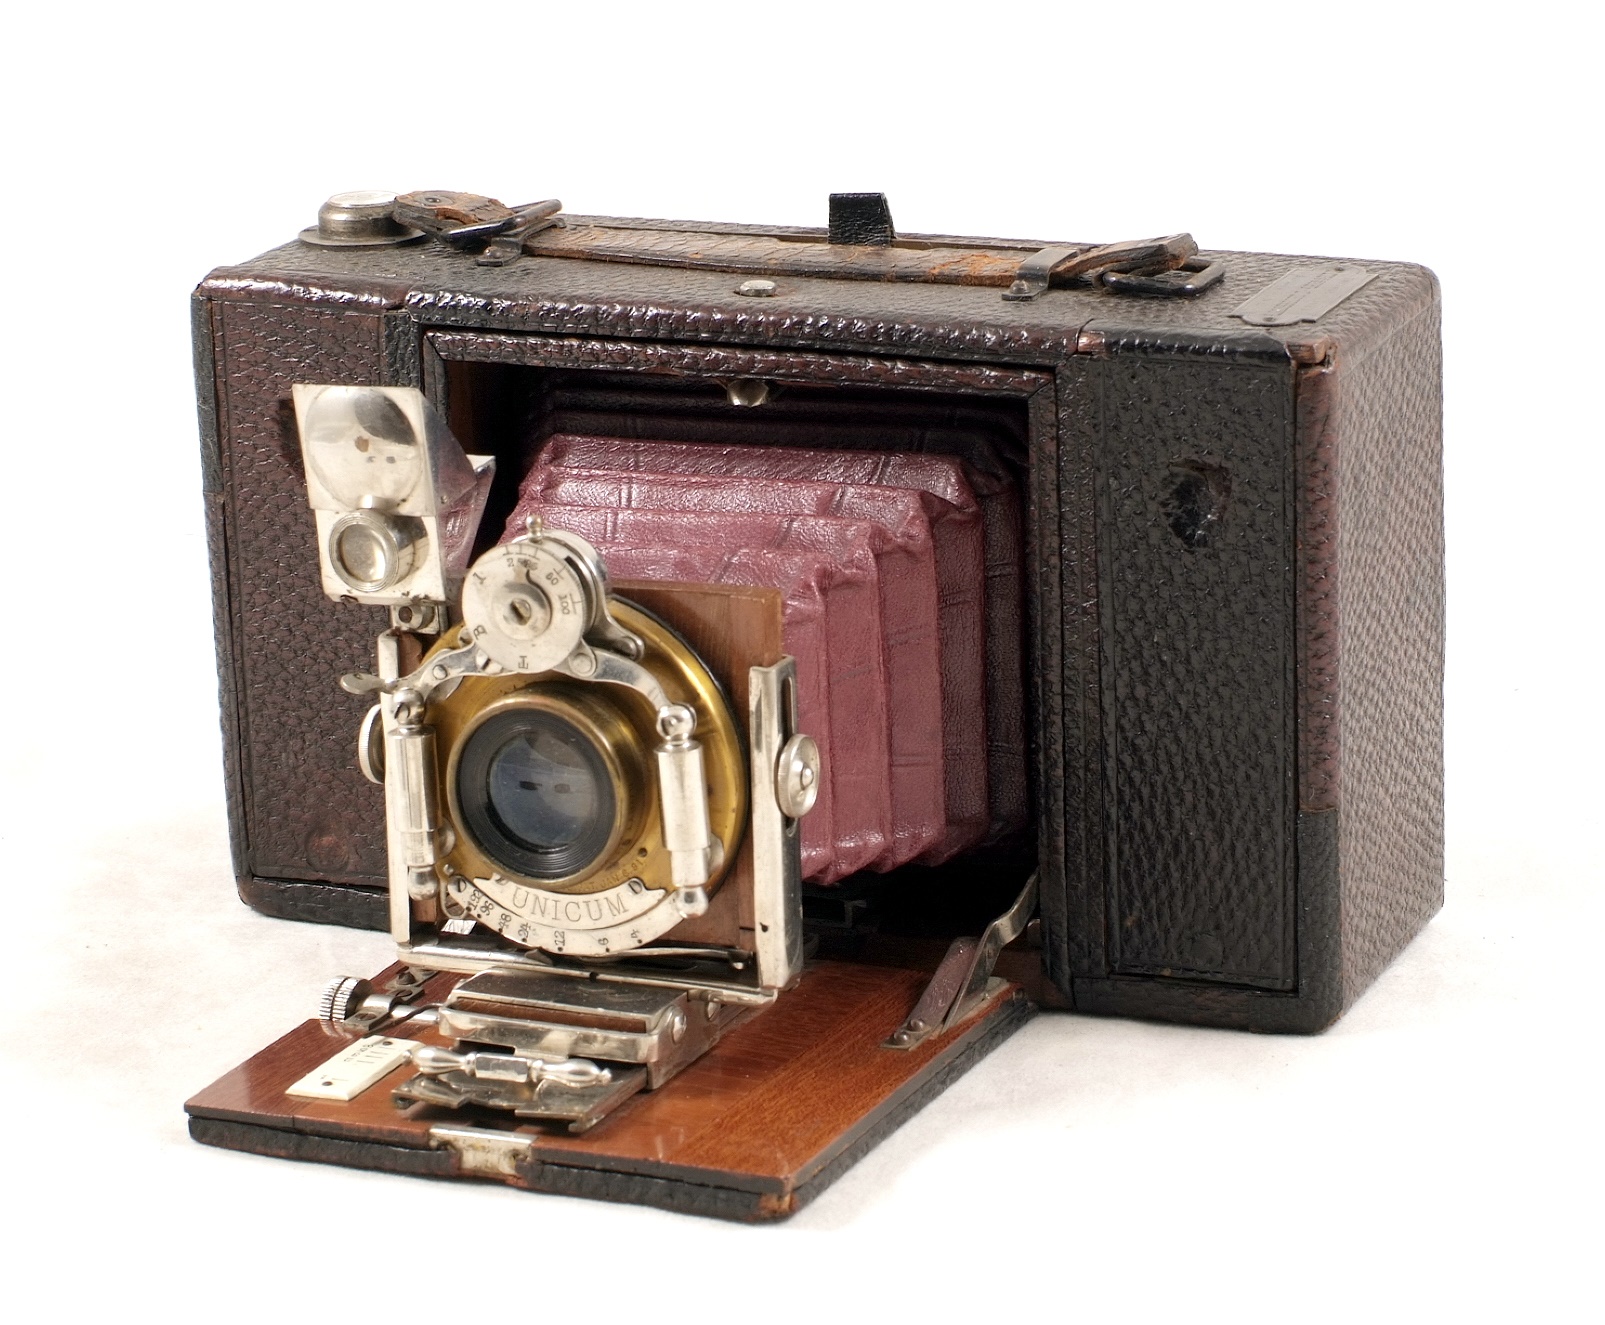 A Rare Rietzschel Clack Combined Roll Film/Plate Camera - Image 6 of 8